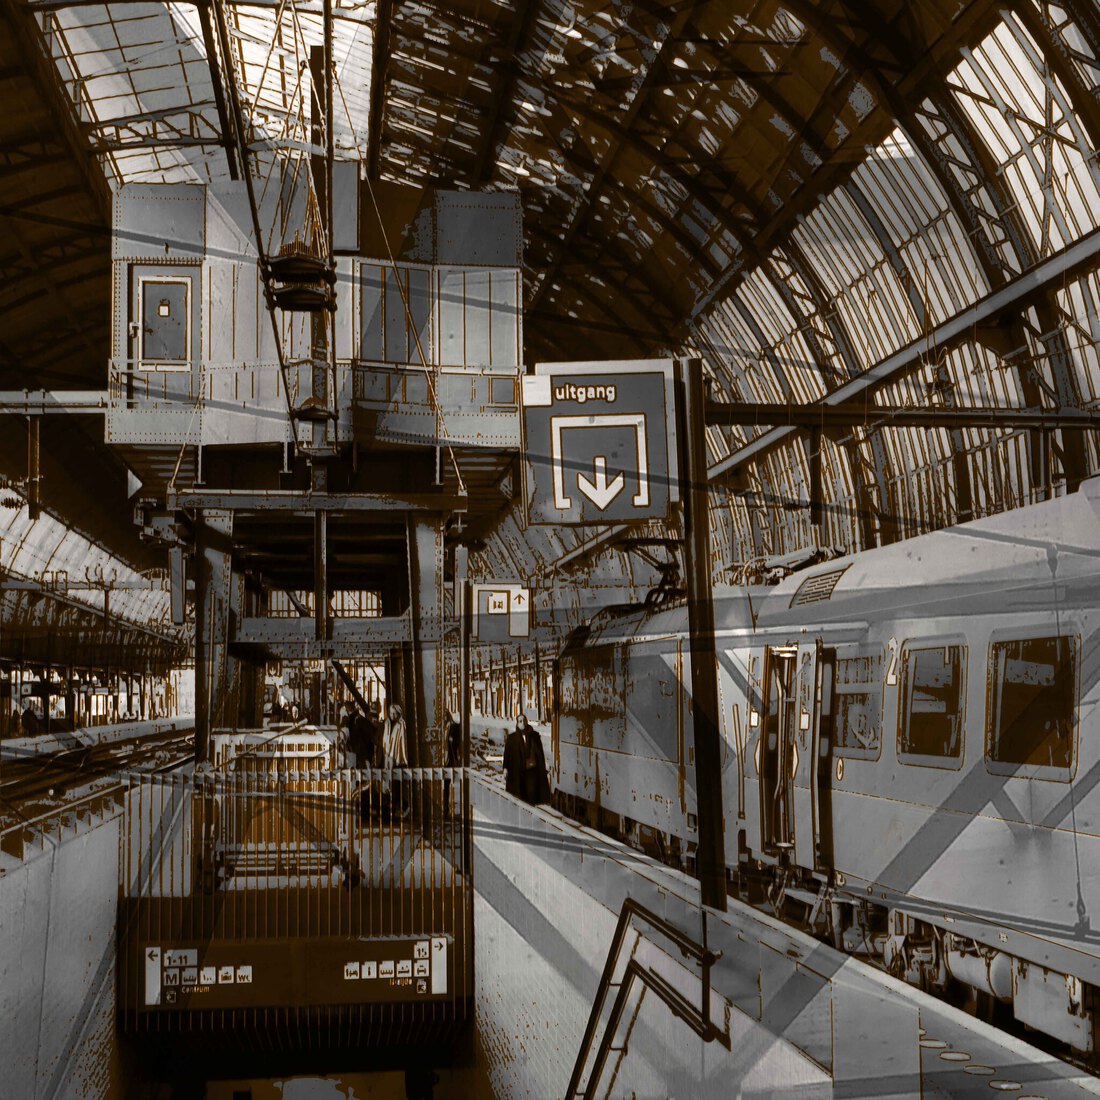  Amsterdam central station 1 - digitale art-print